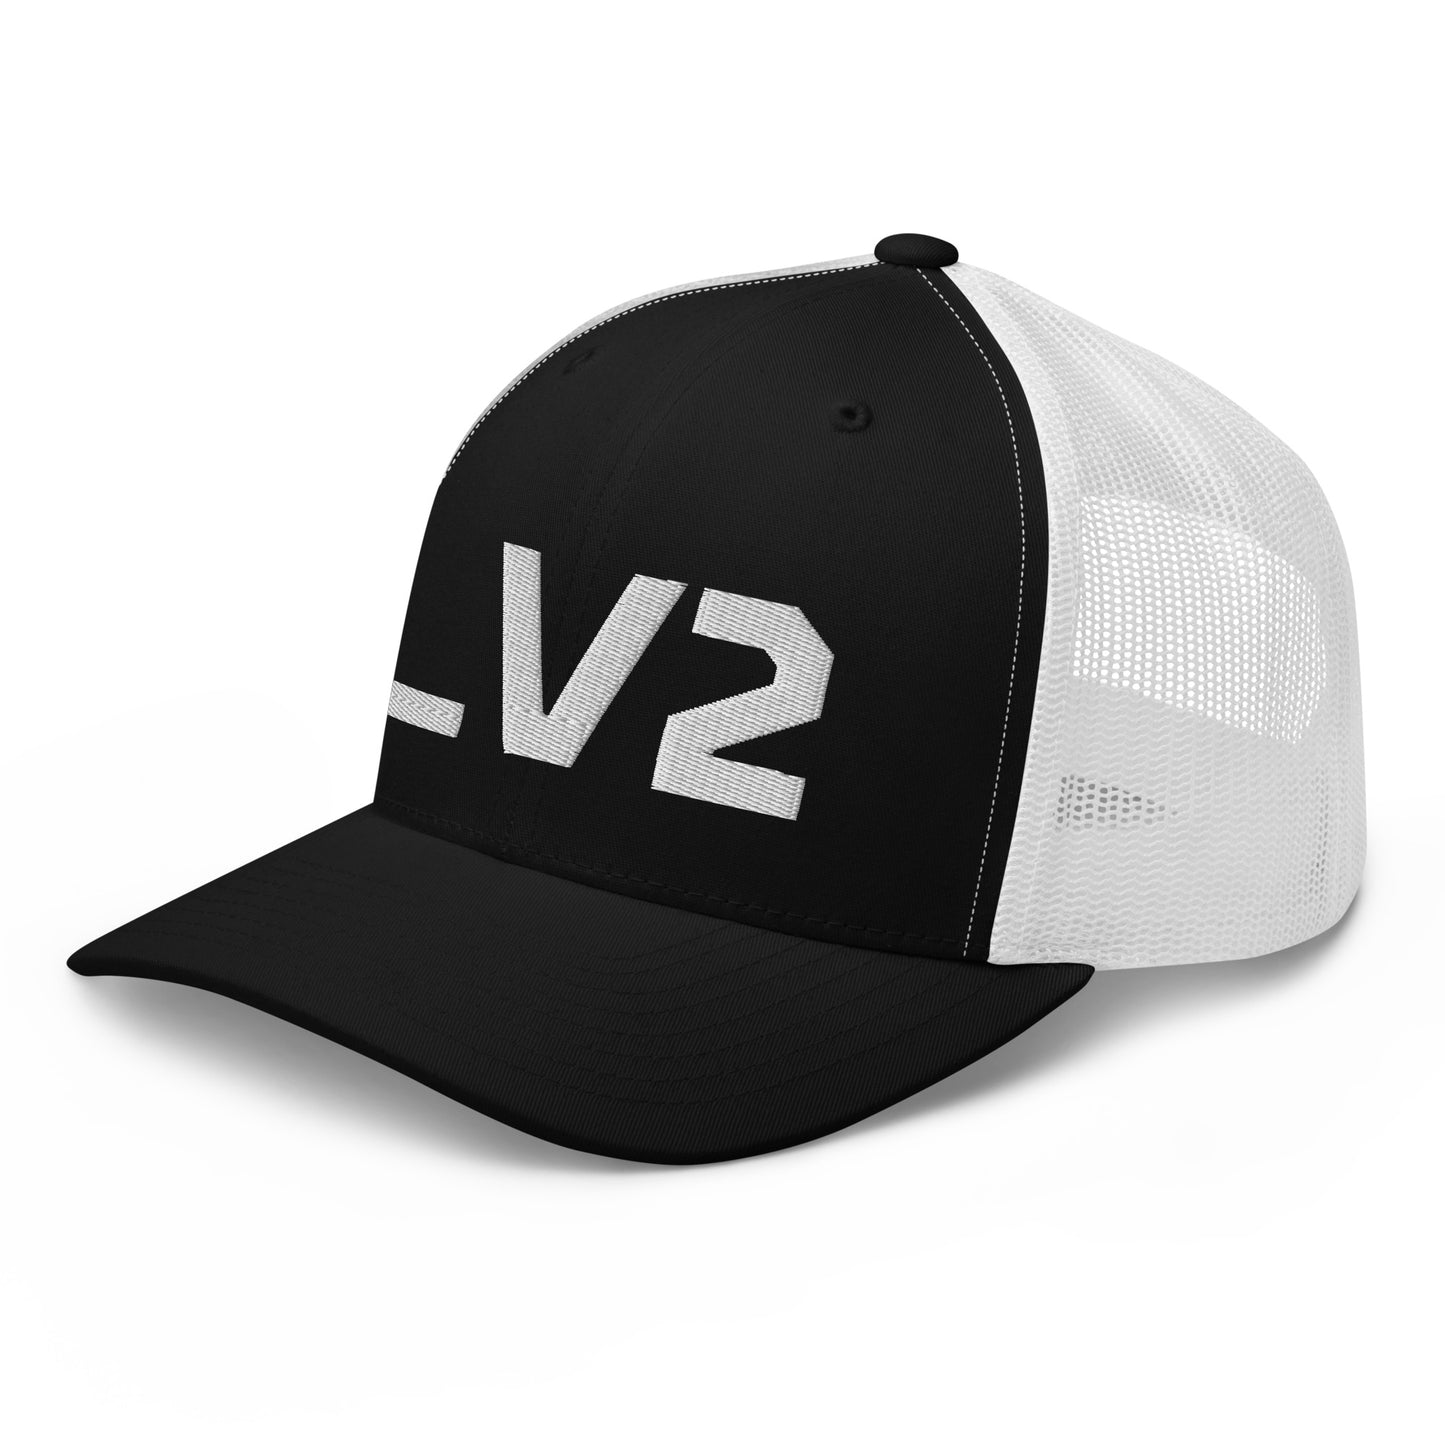 _V2 Embroidered Trucker Cap